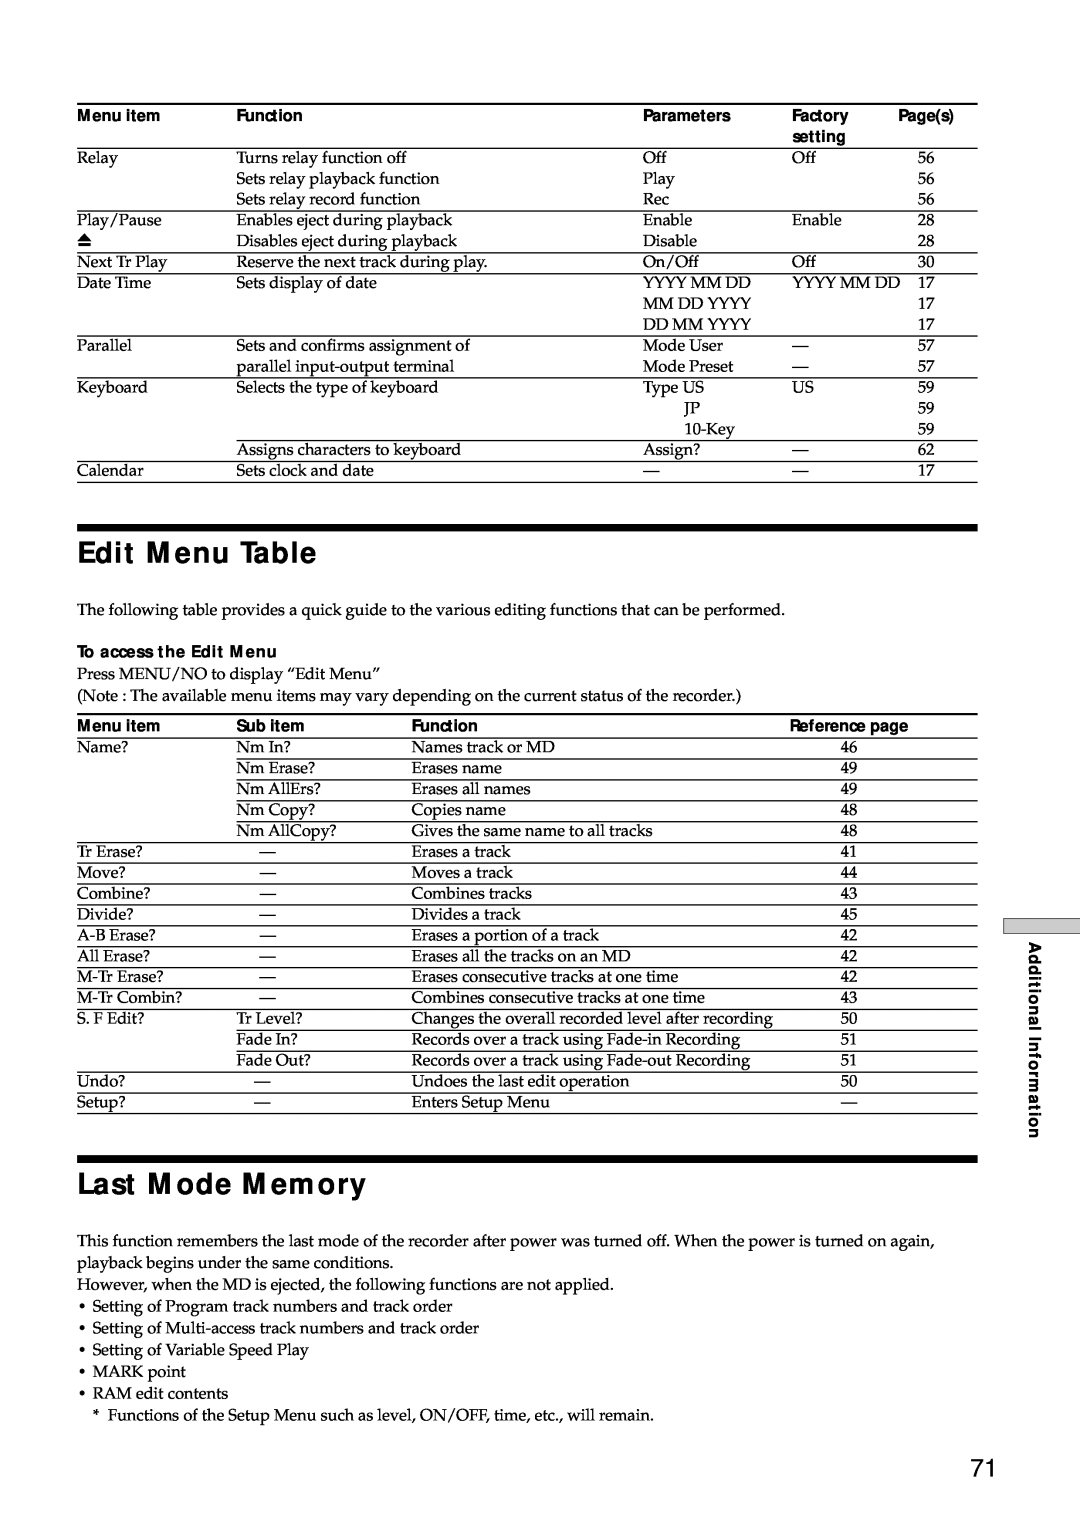 Sony MDS-E12 operating instructions Edit Menu Table, Last Mode Memory 